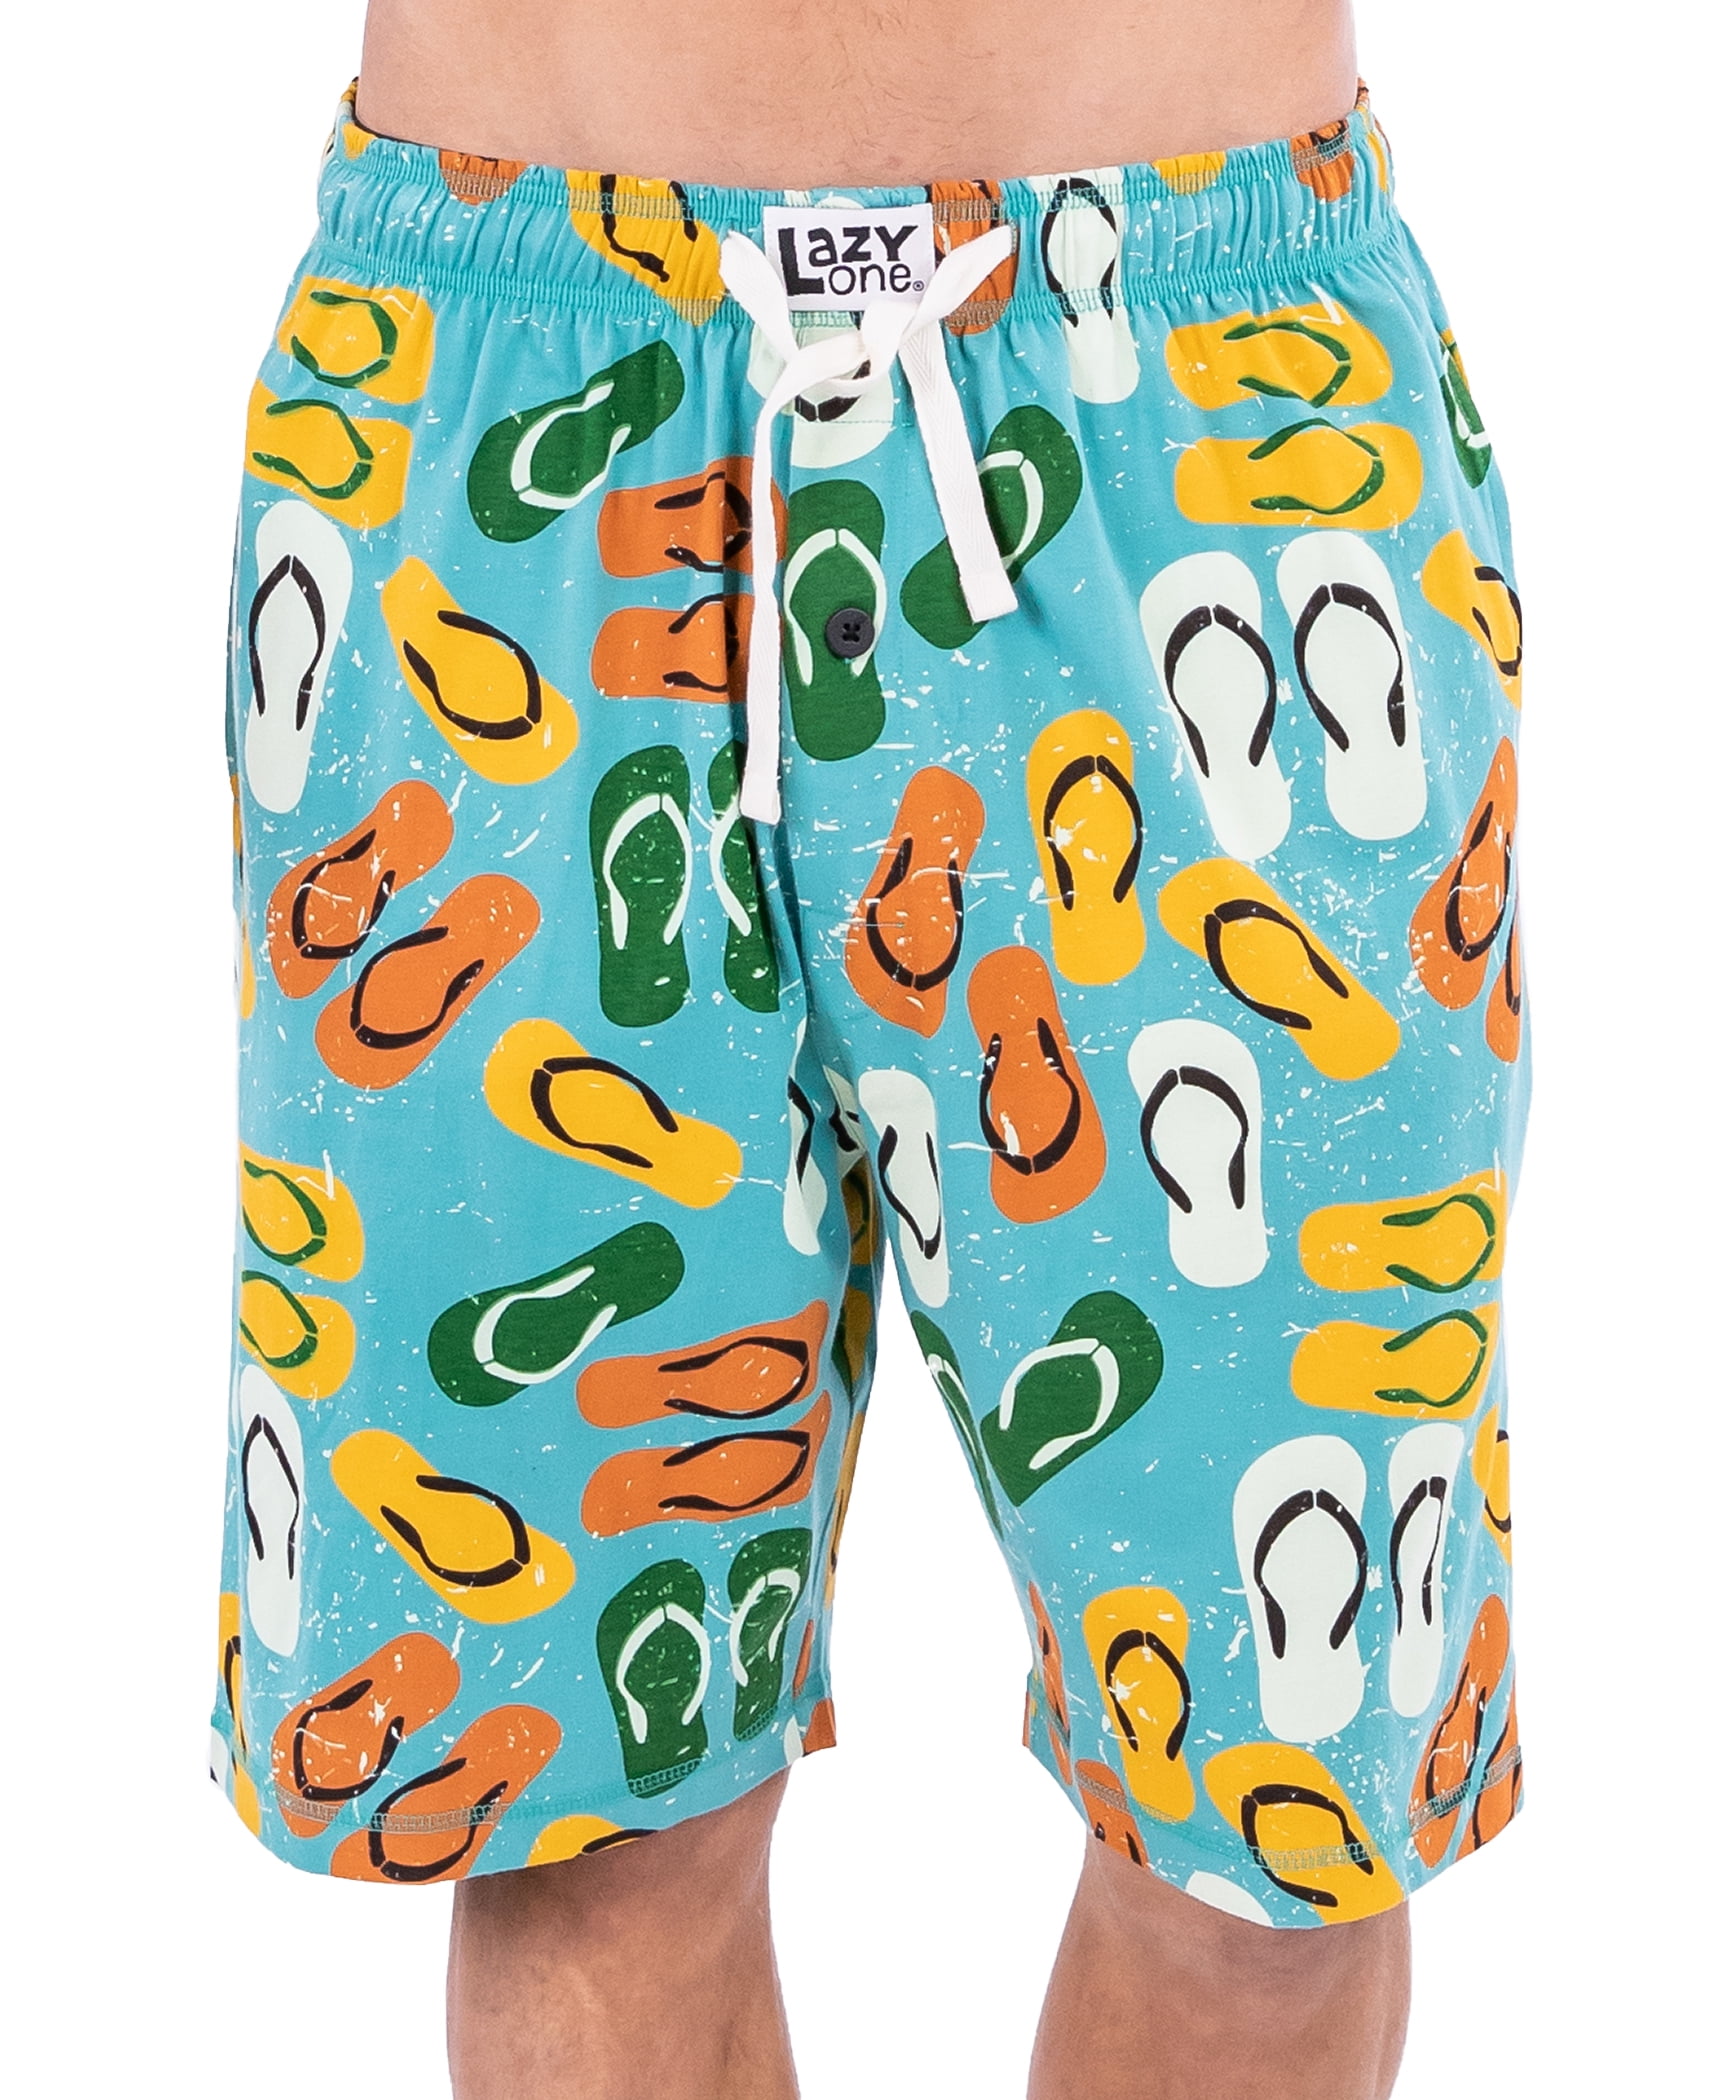 LazyOne Pajama Shorts for Men, Flip Flops, Cotton Sleepwear, Large ...